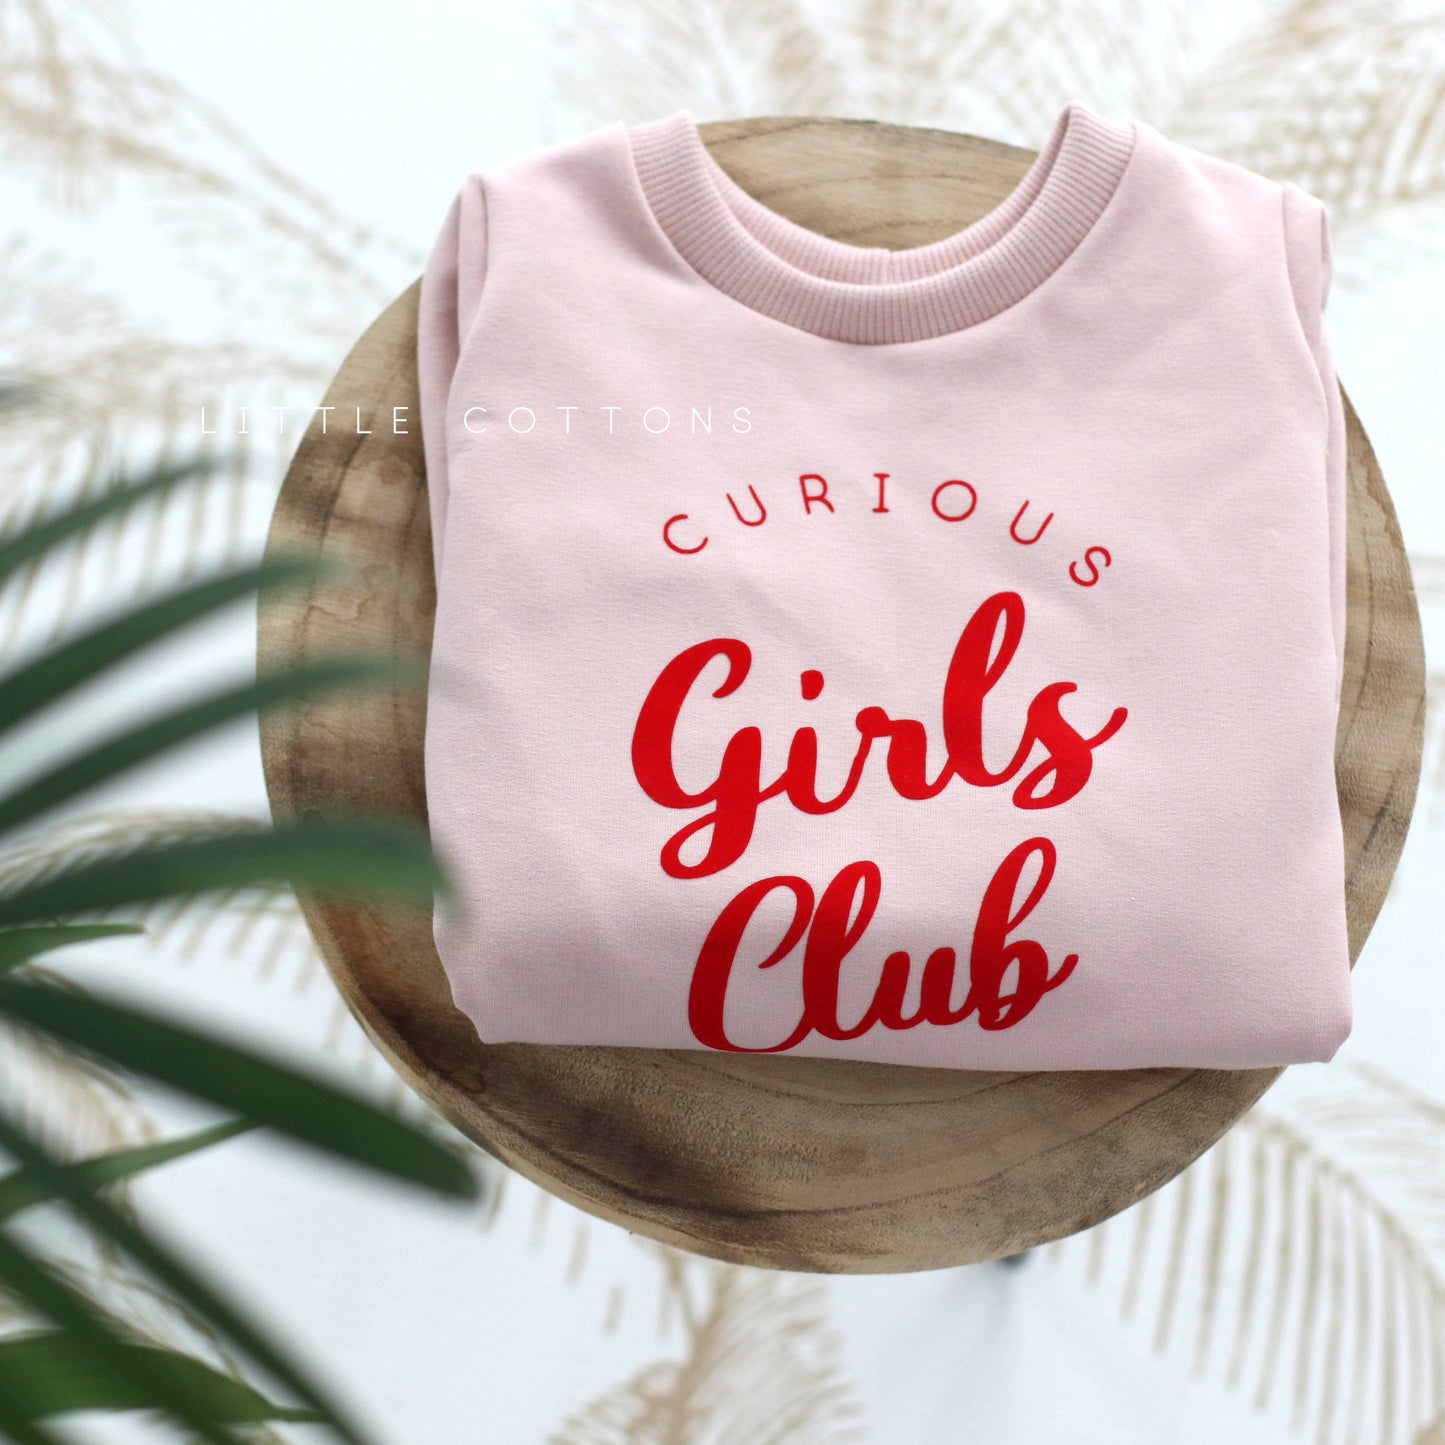 CURIOUS GIRLS CLUB  sweatshirt - bubble gum